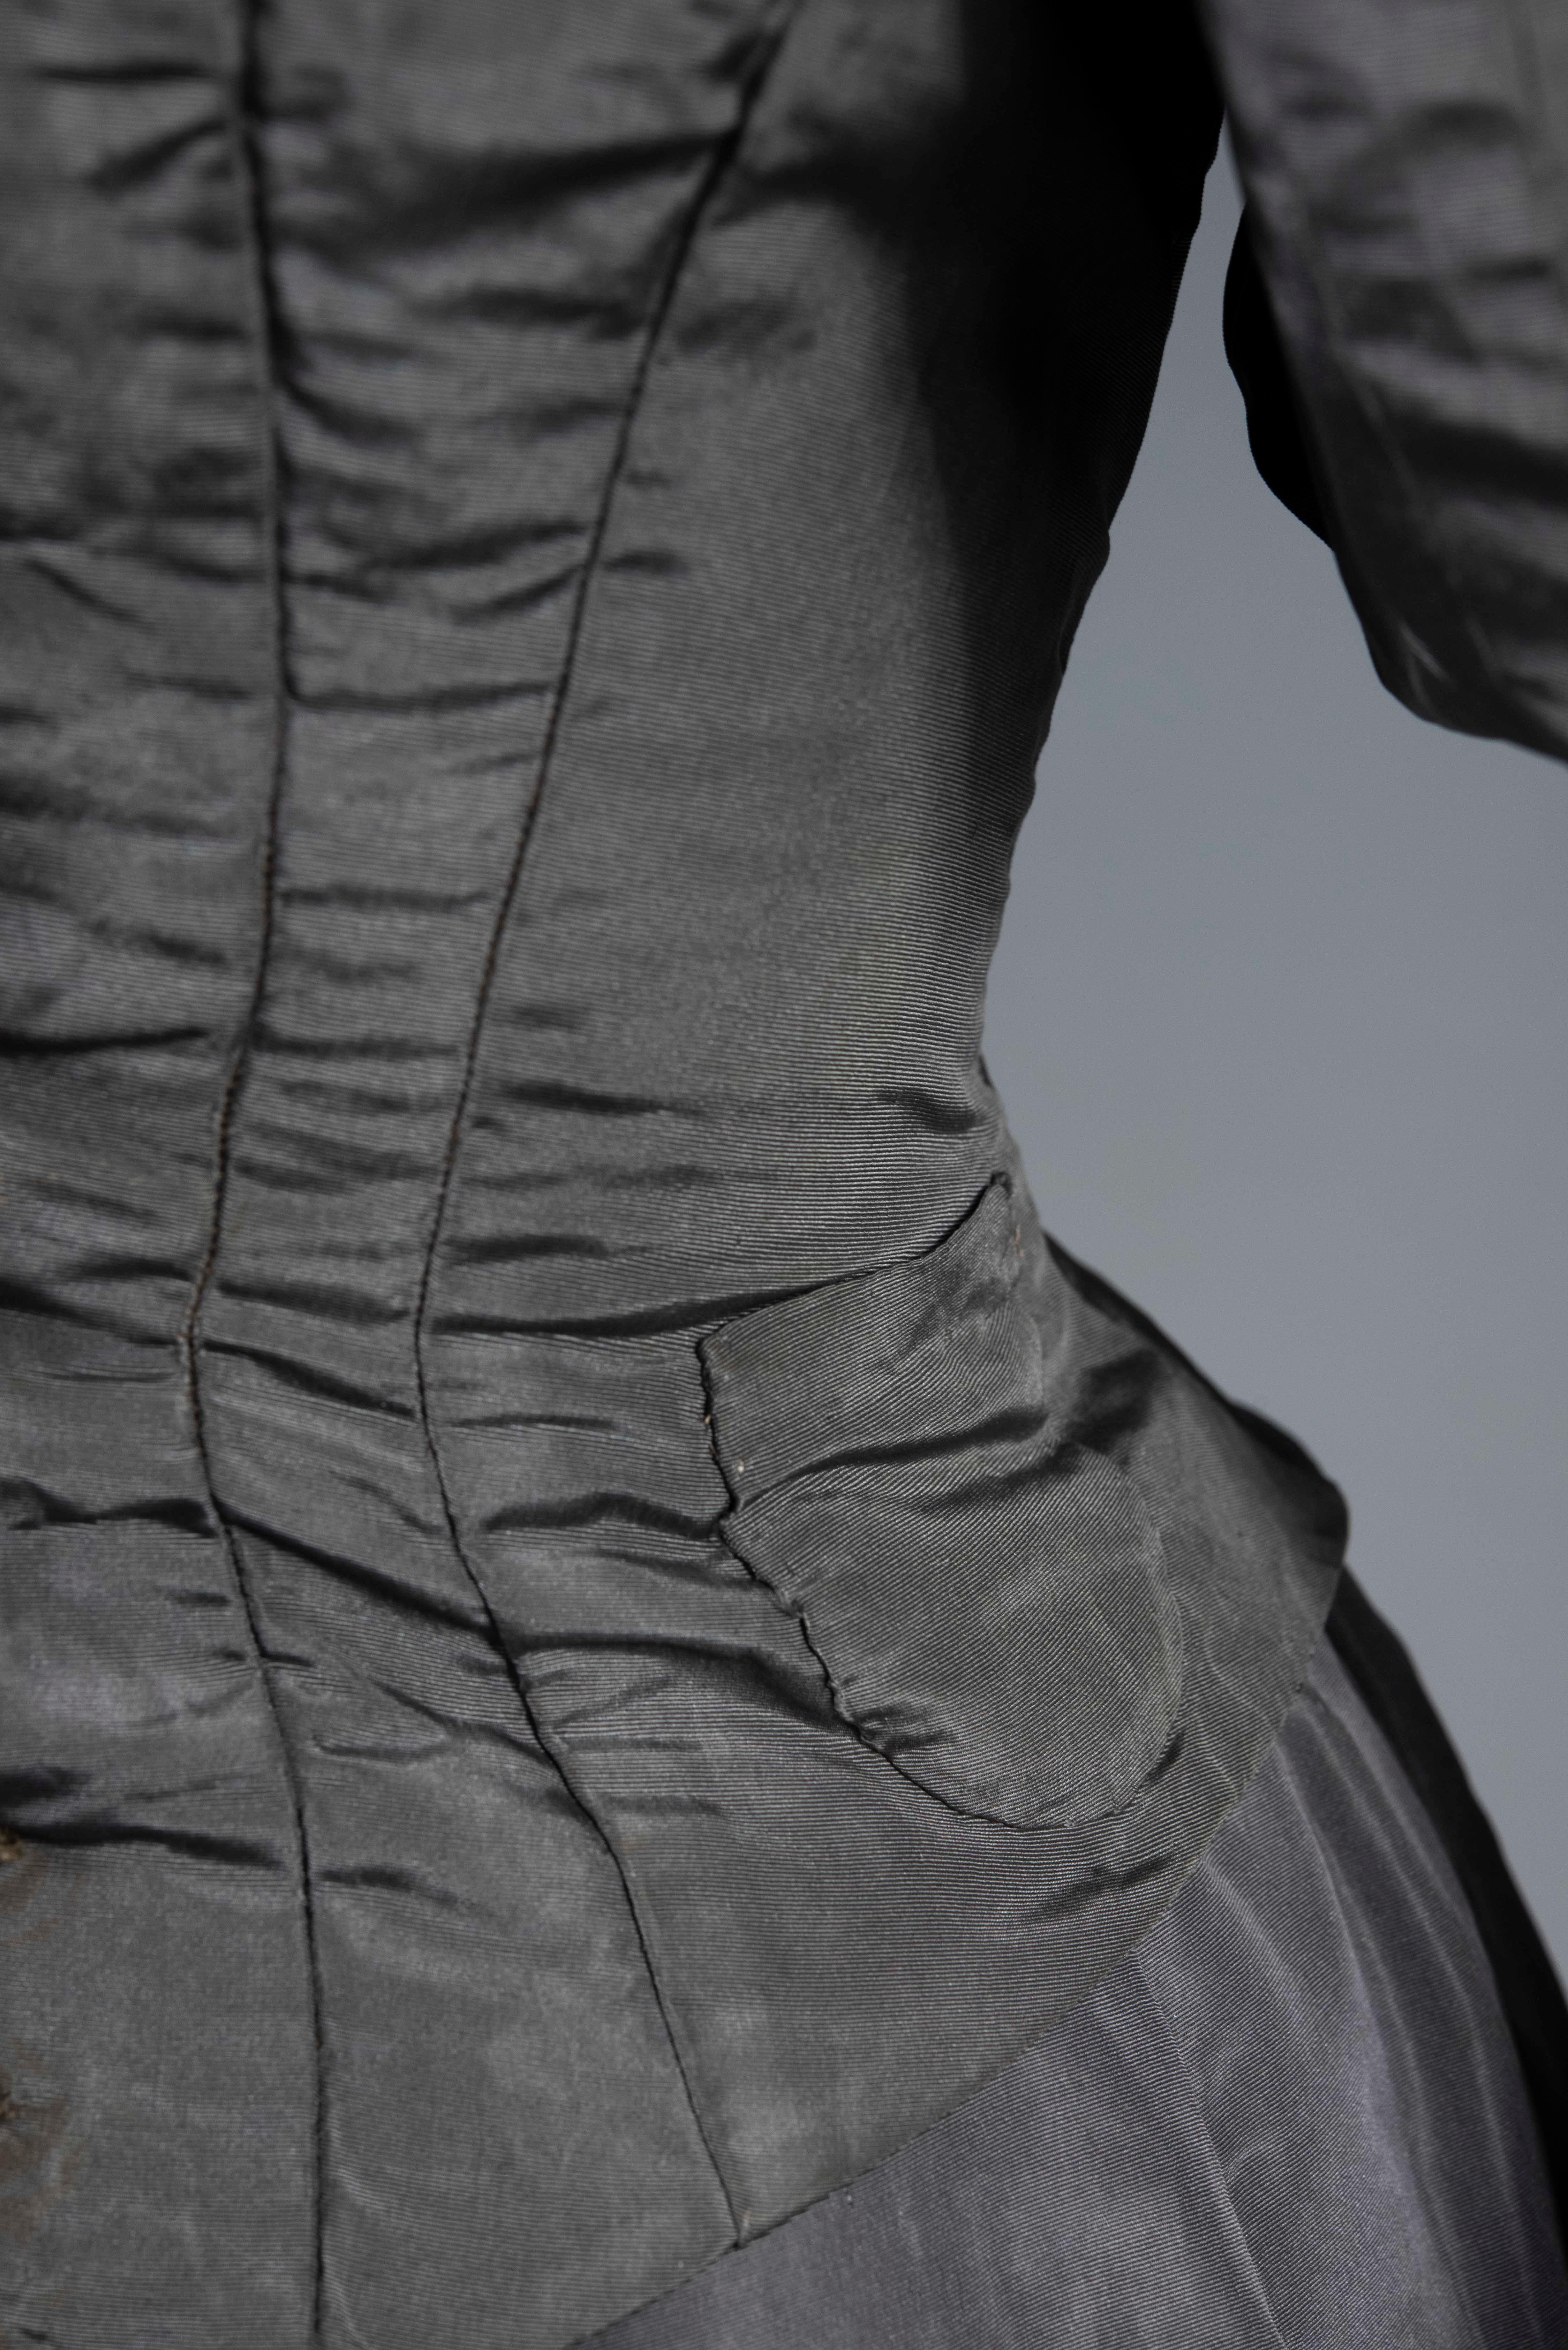 Women's A Mutton Sleeves Silk Day Dress Edwardian Period Circa 1895